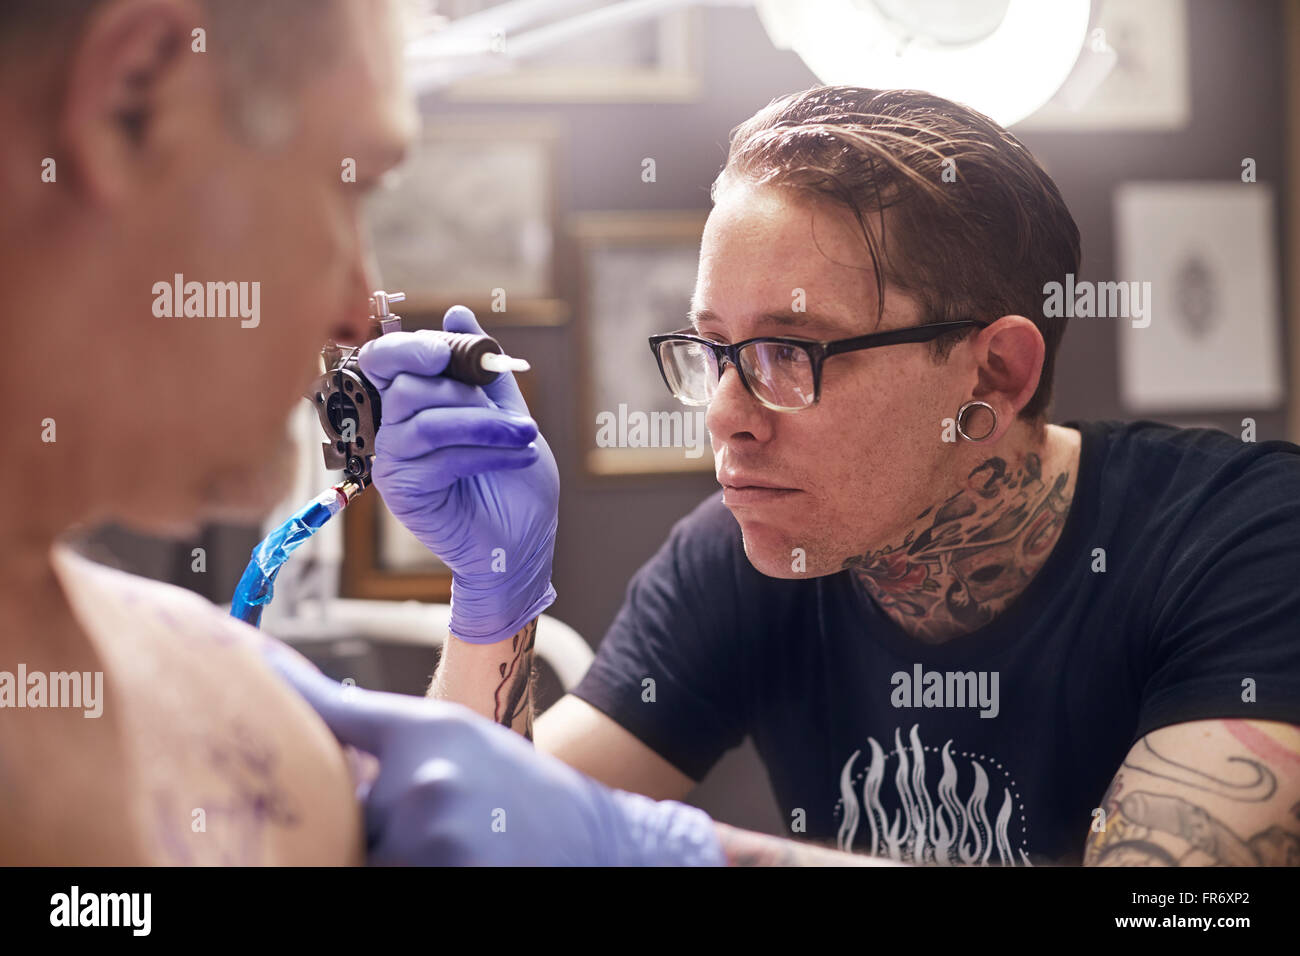 Focused tattoo artist preparing tattoo gun Stock Photo